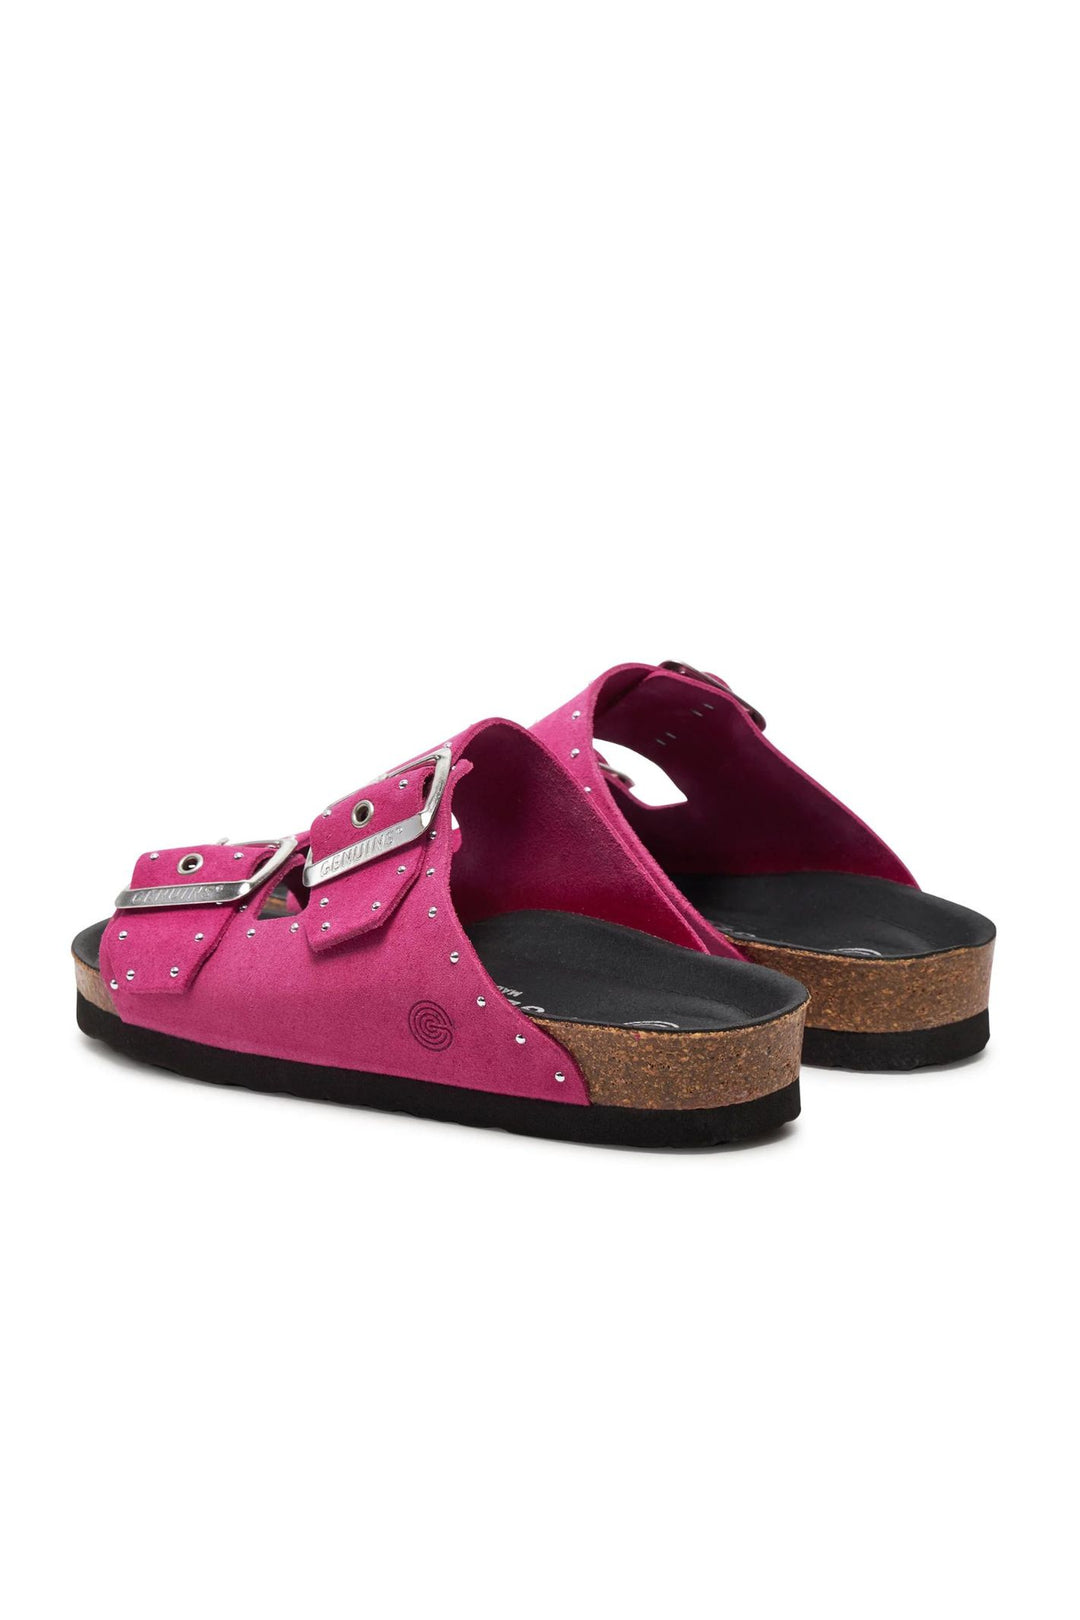 Genuins G105590 Honolulu Lead Fuchsia Pink Velour Studded Sandals